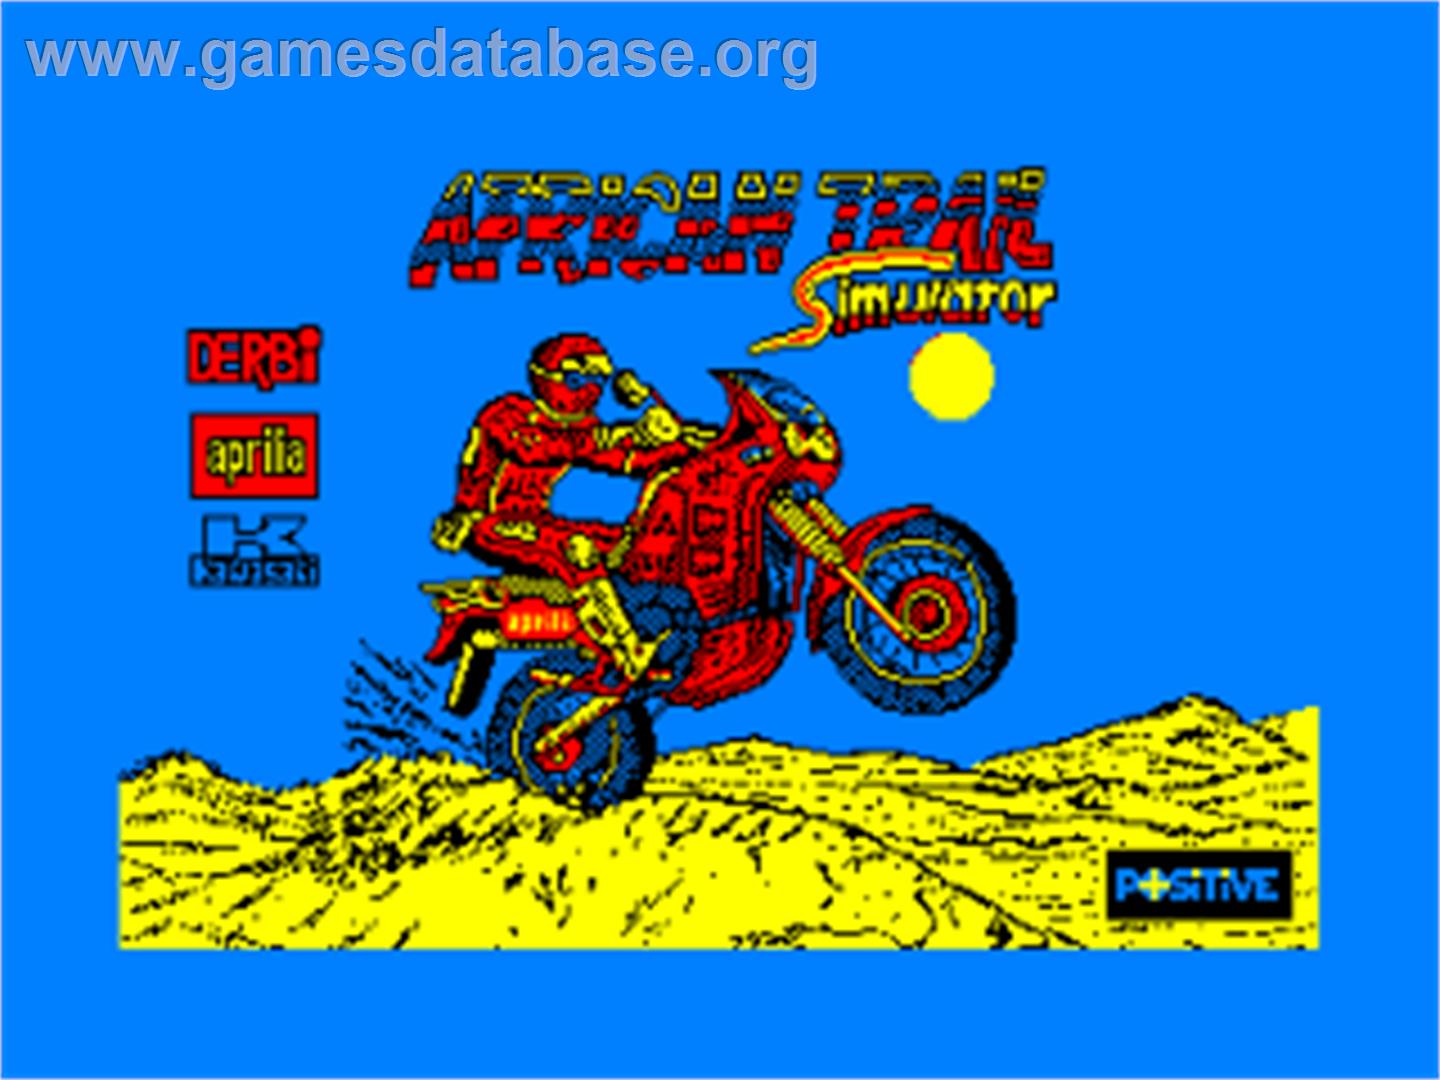 African Trail Simulator - Amstrad CPC - Artwork - Title Screen